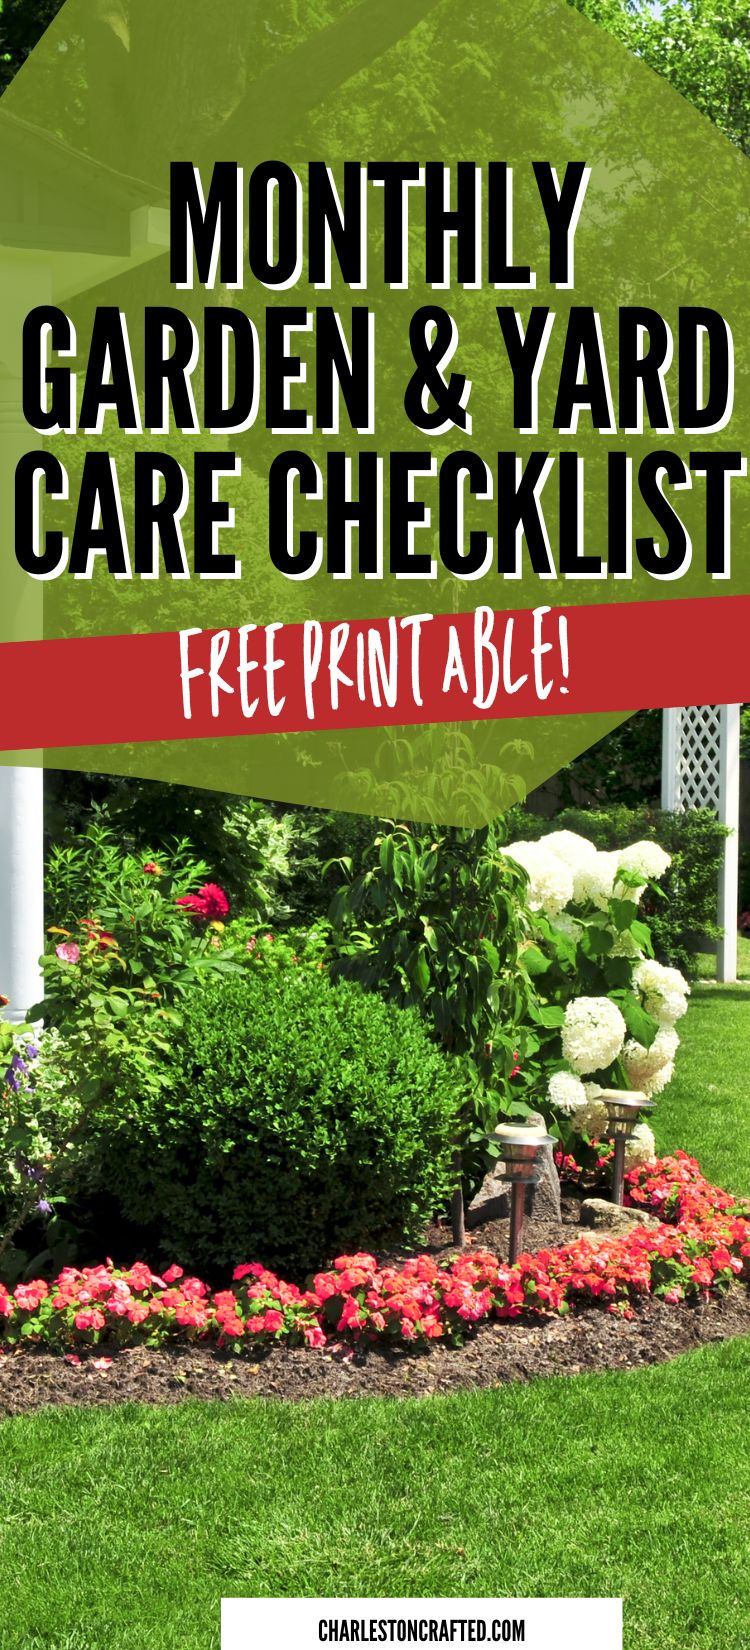 Monthly Garden & Yard Care Checklist - free printable!